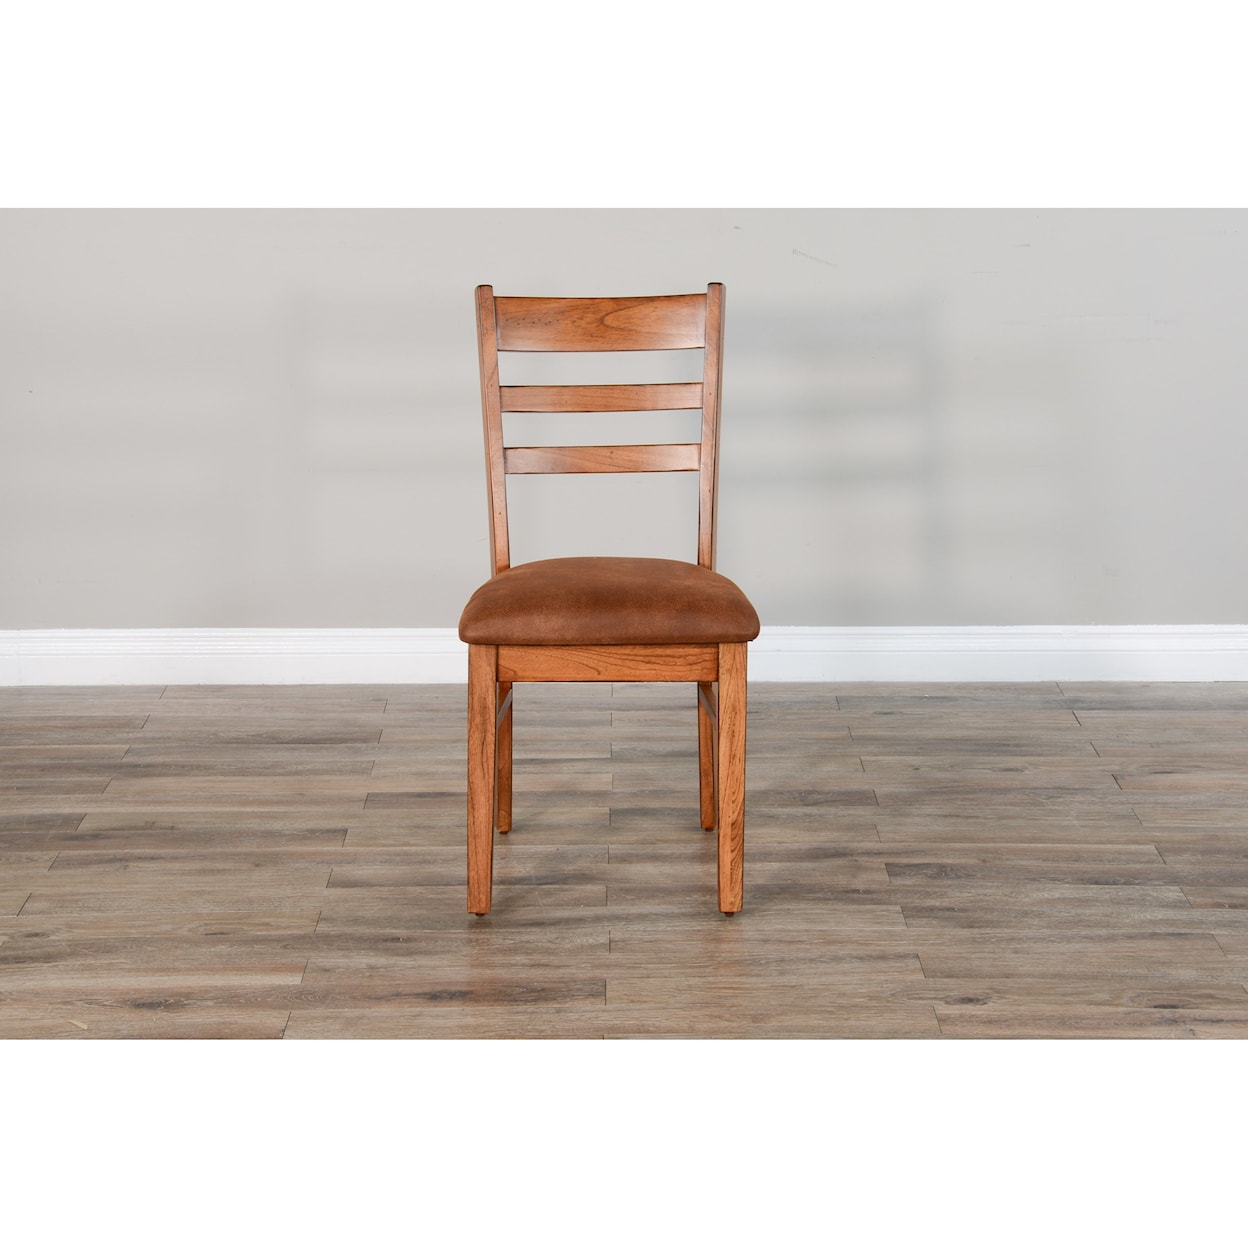 Sunny Designs Sedona Ladderback Chair with Cushion Seat